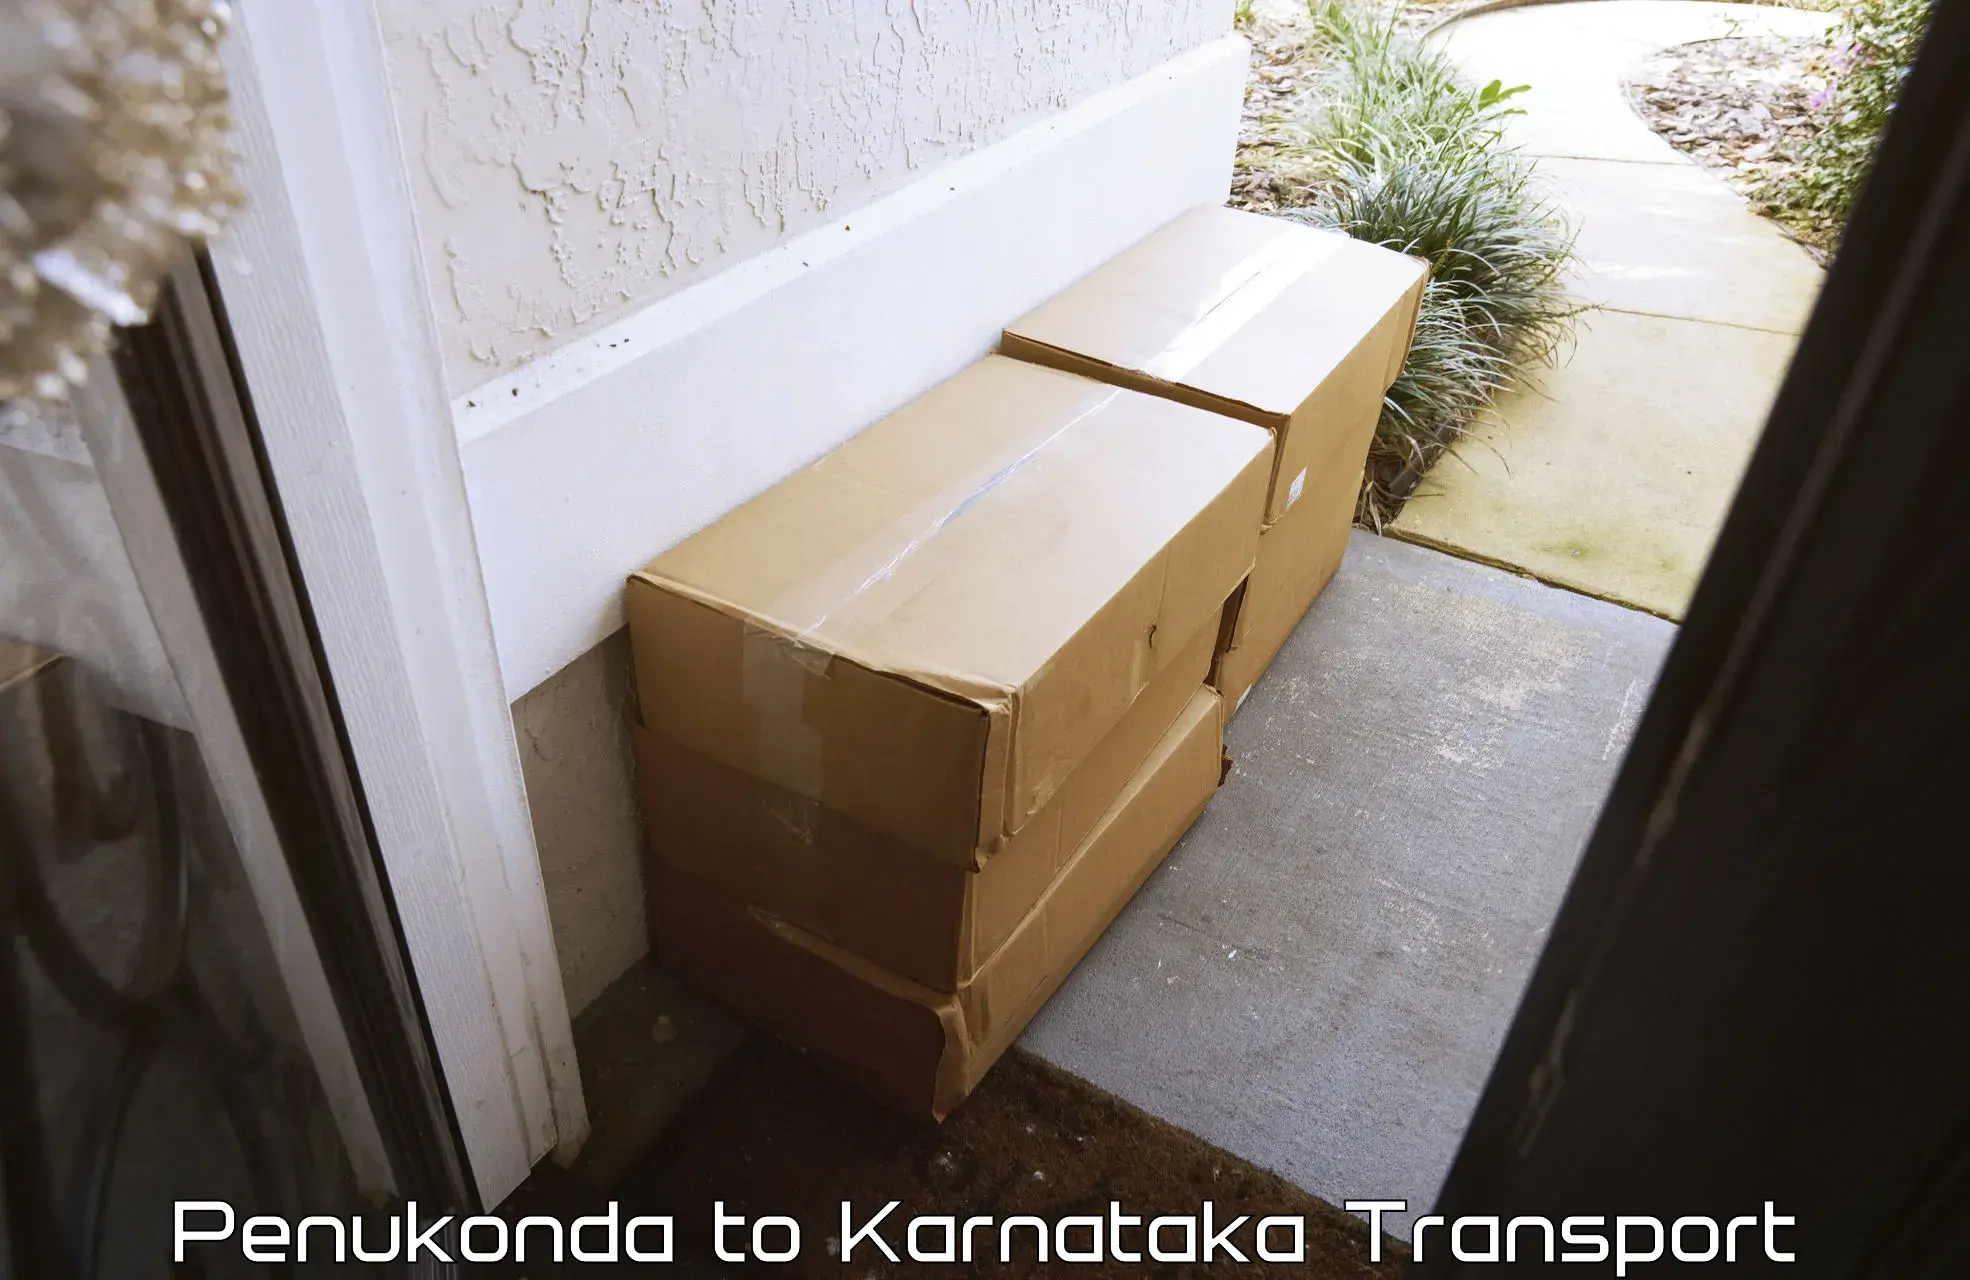 Transport bike from one state to another Penukonda to Kanjarakatte